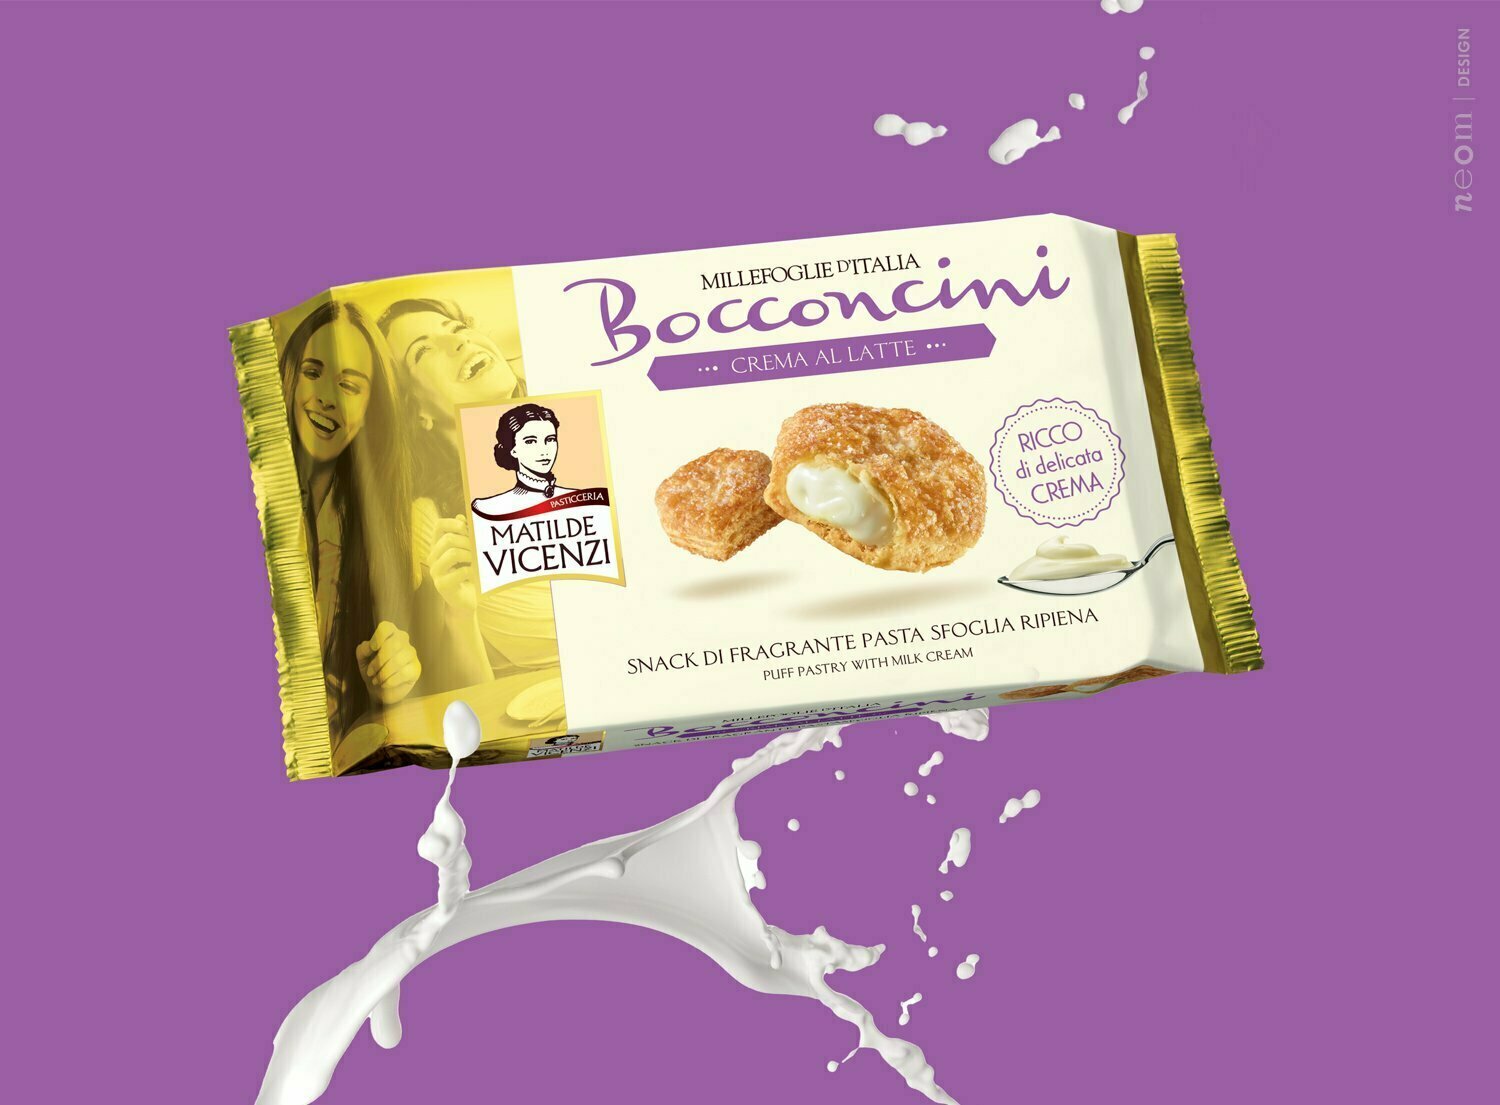 Bocconcini品牌糕点食品包装设计(图4)